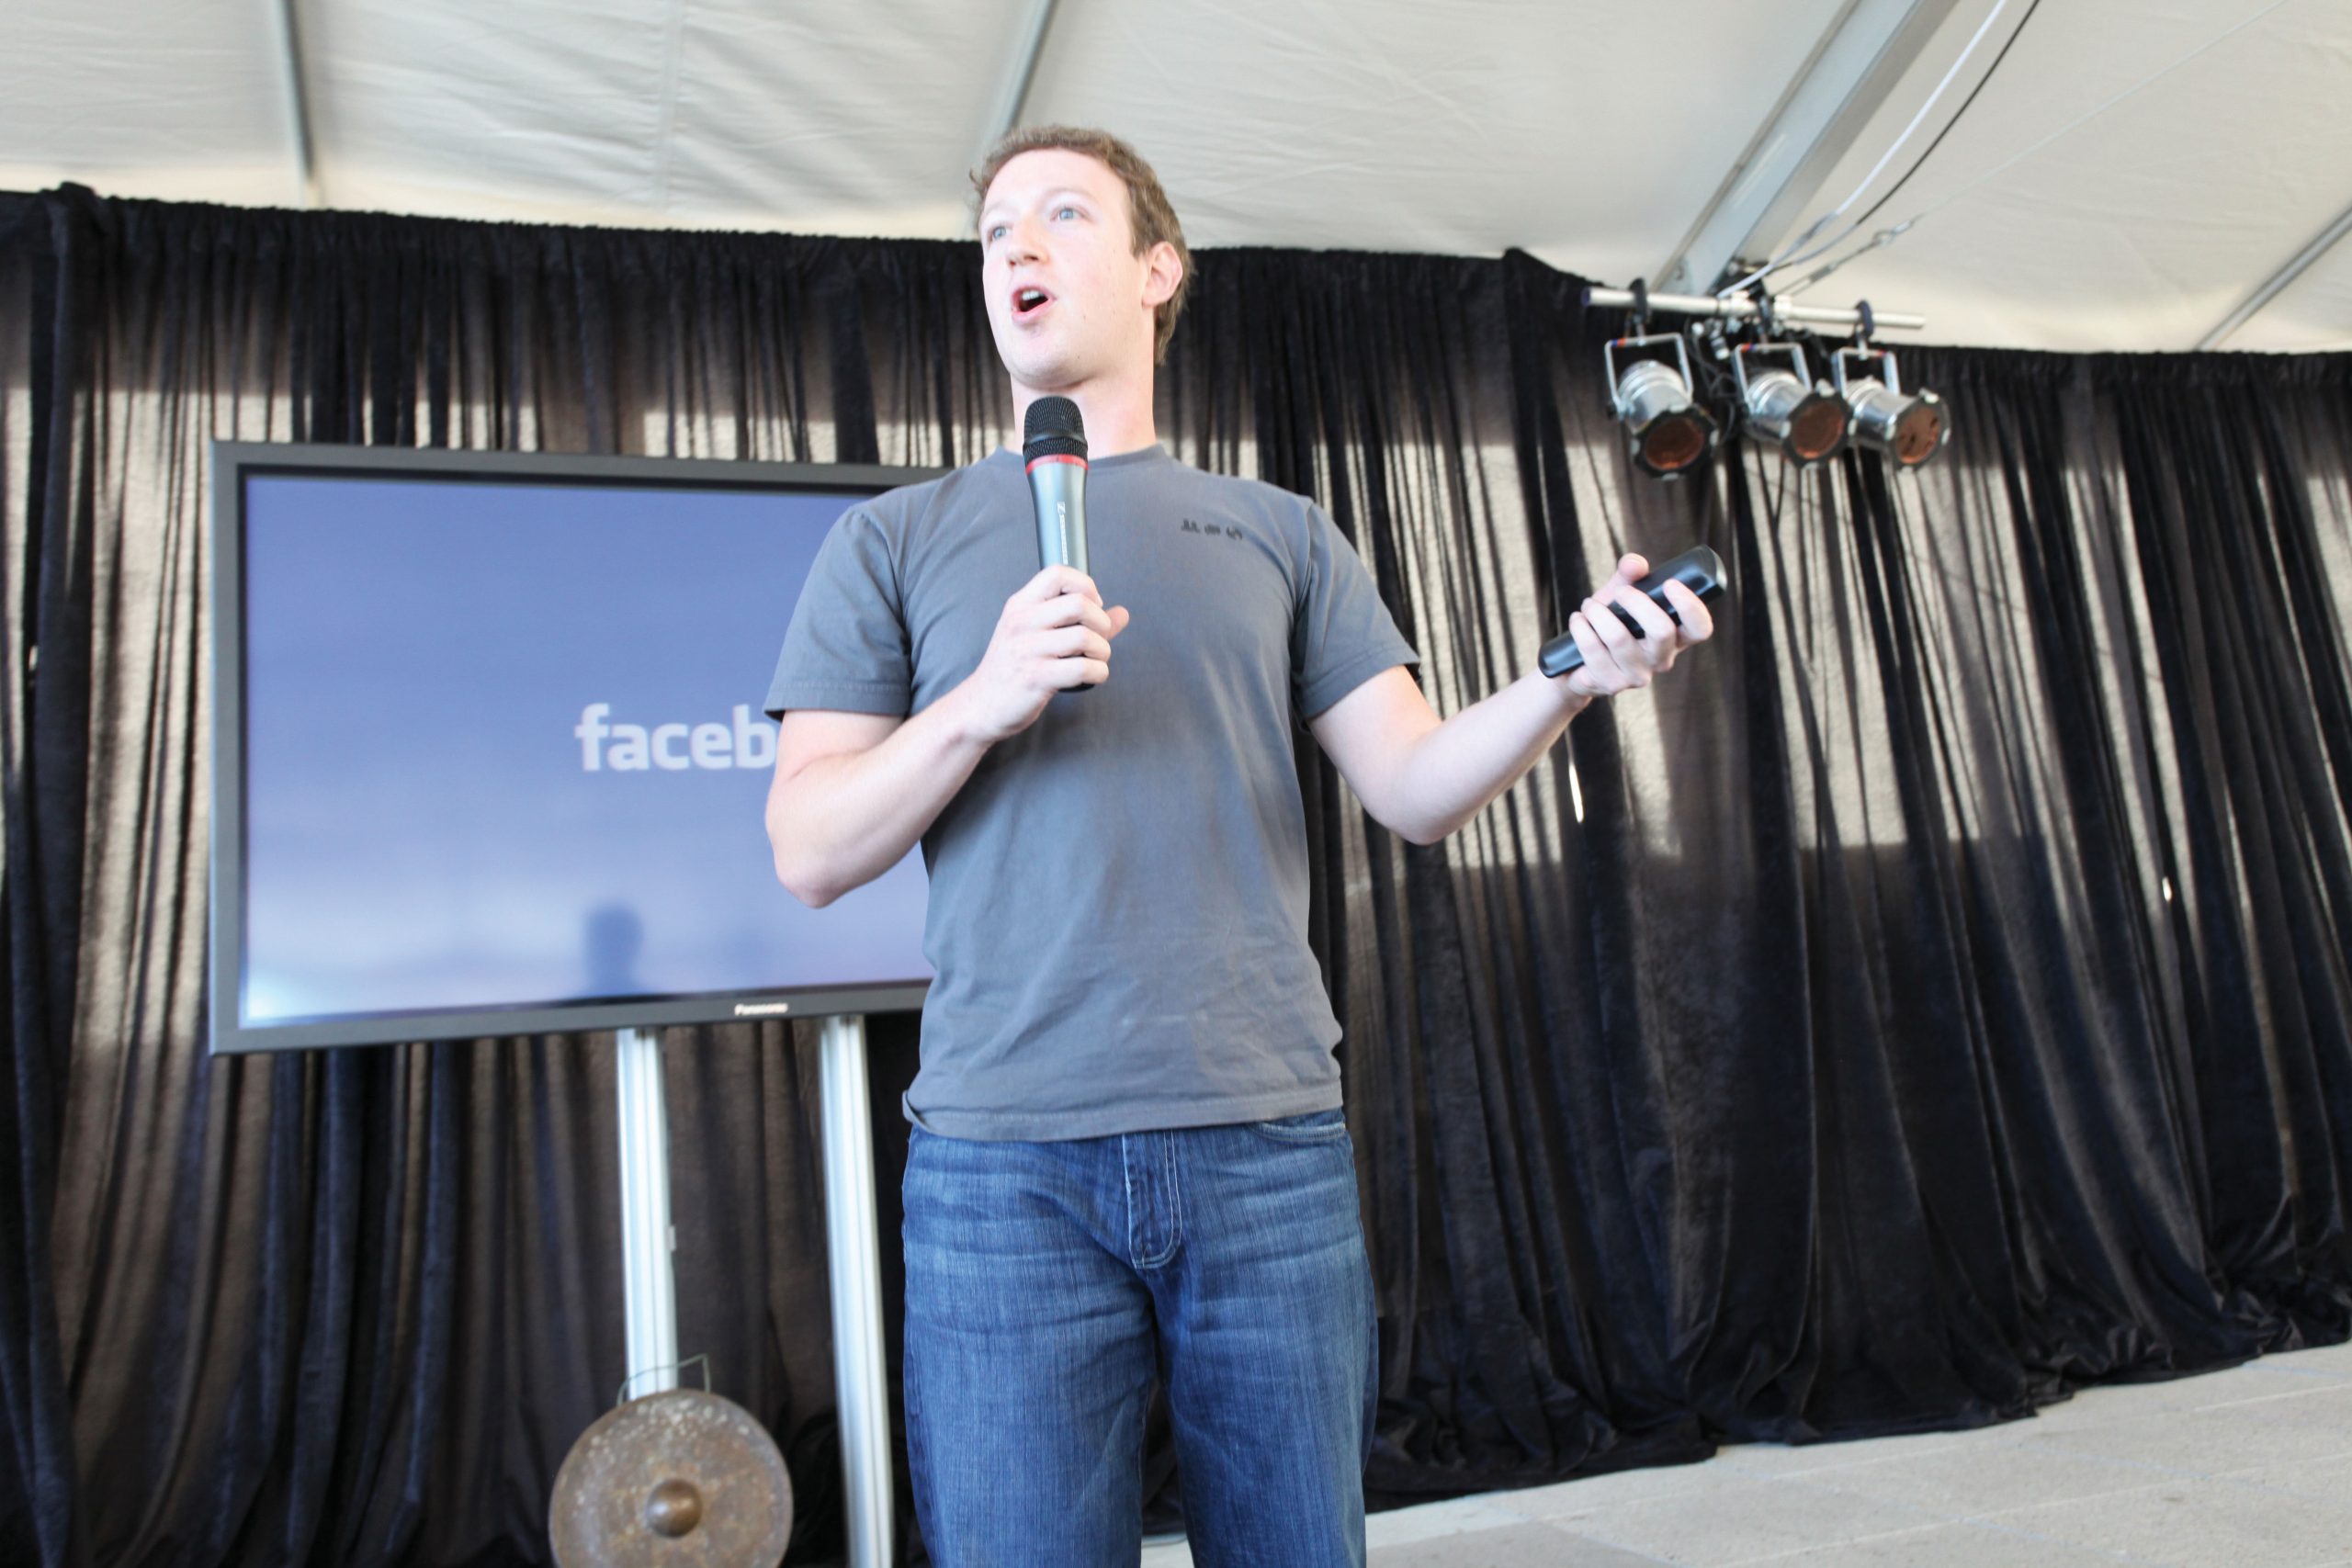 Mark Zuckerberg giving a speech at a convention